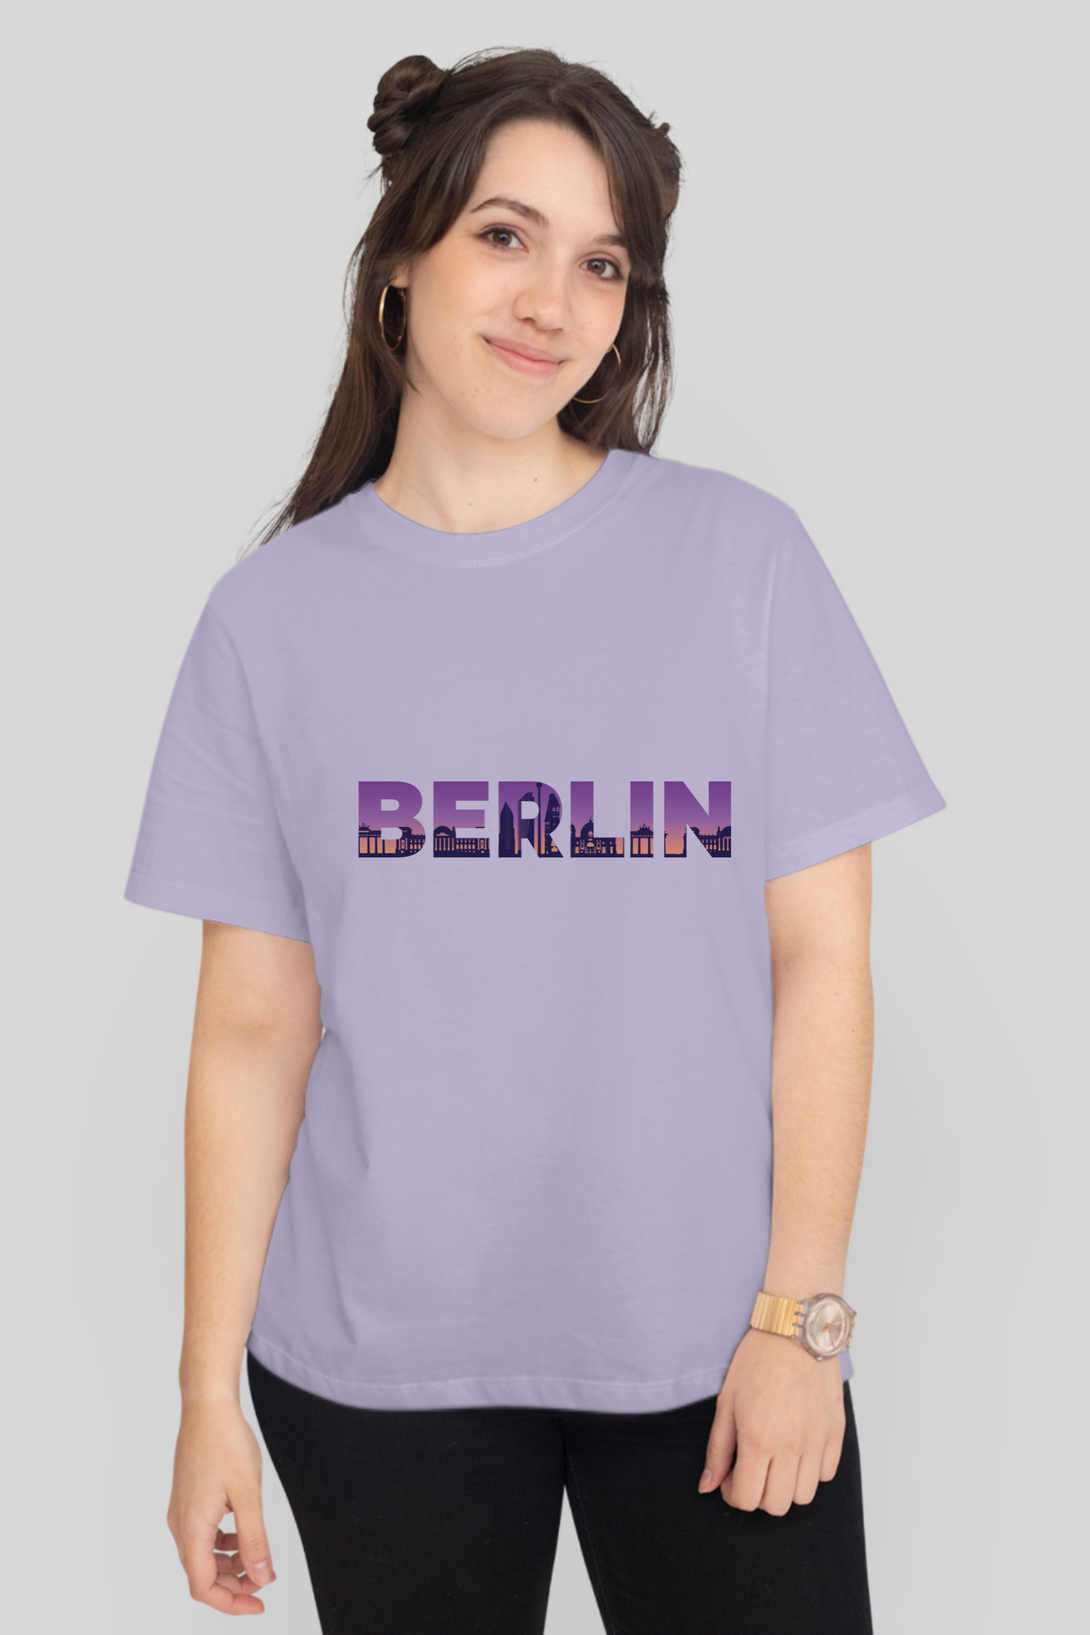 Berlin Skyline Printed T-Shirt For Women - WowWaves - 12